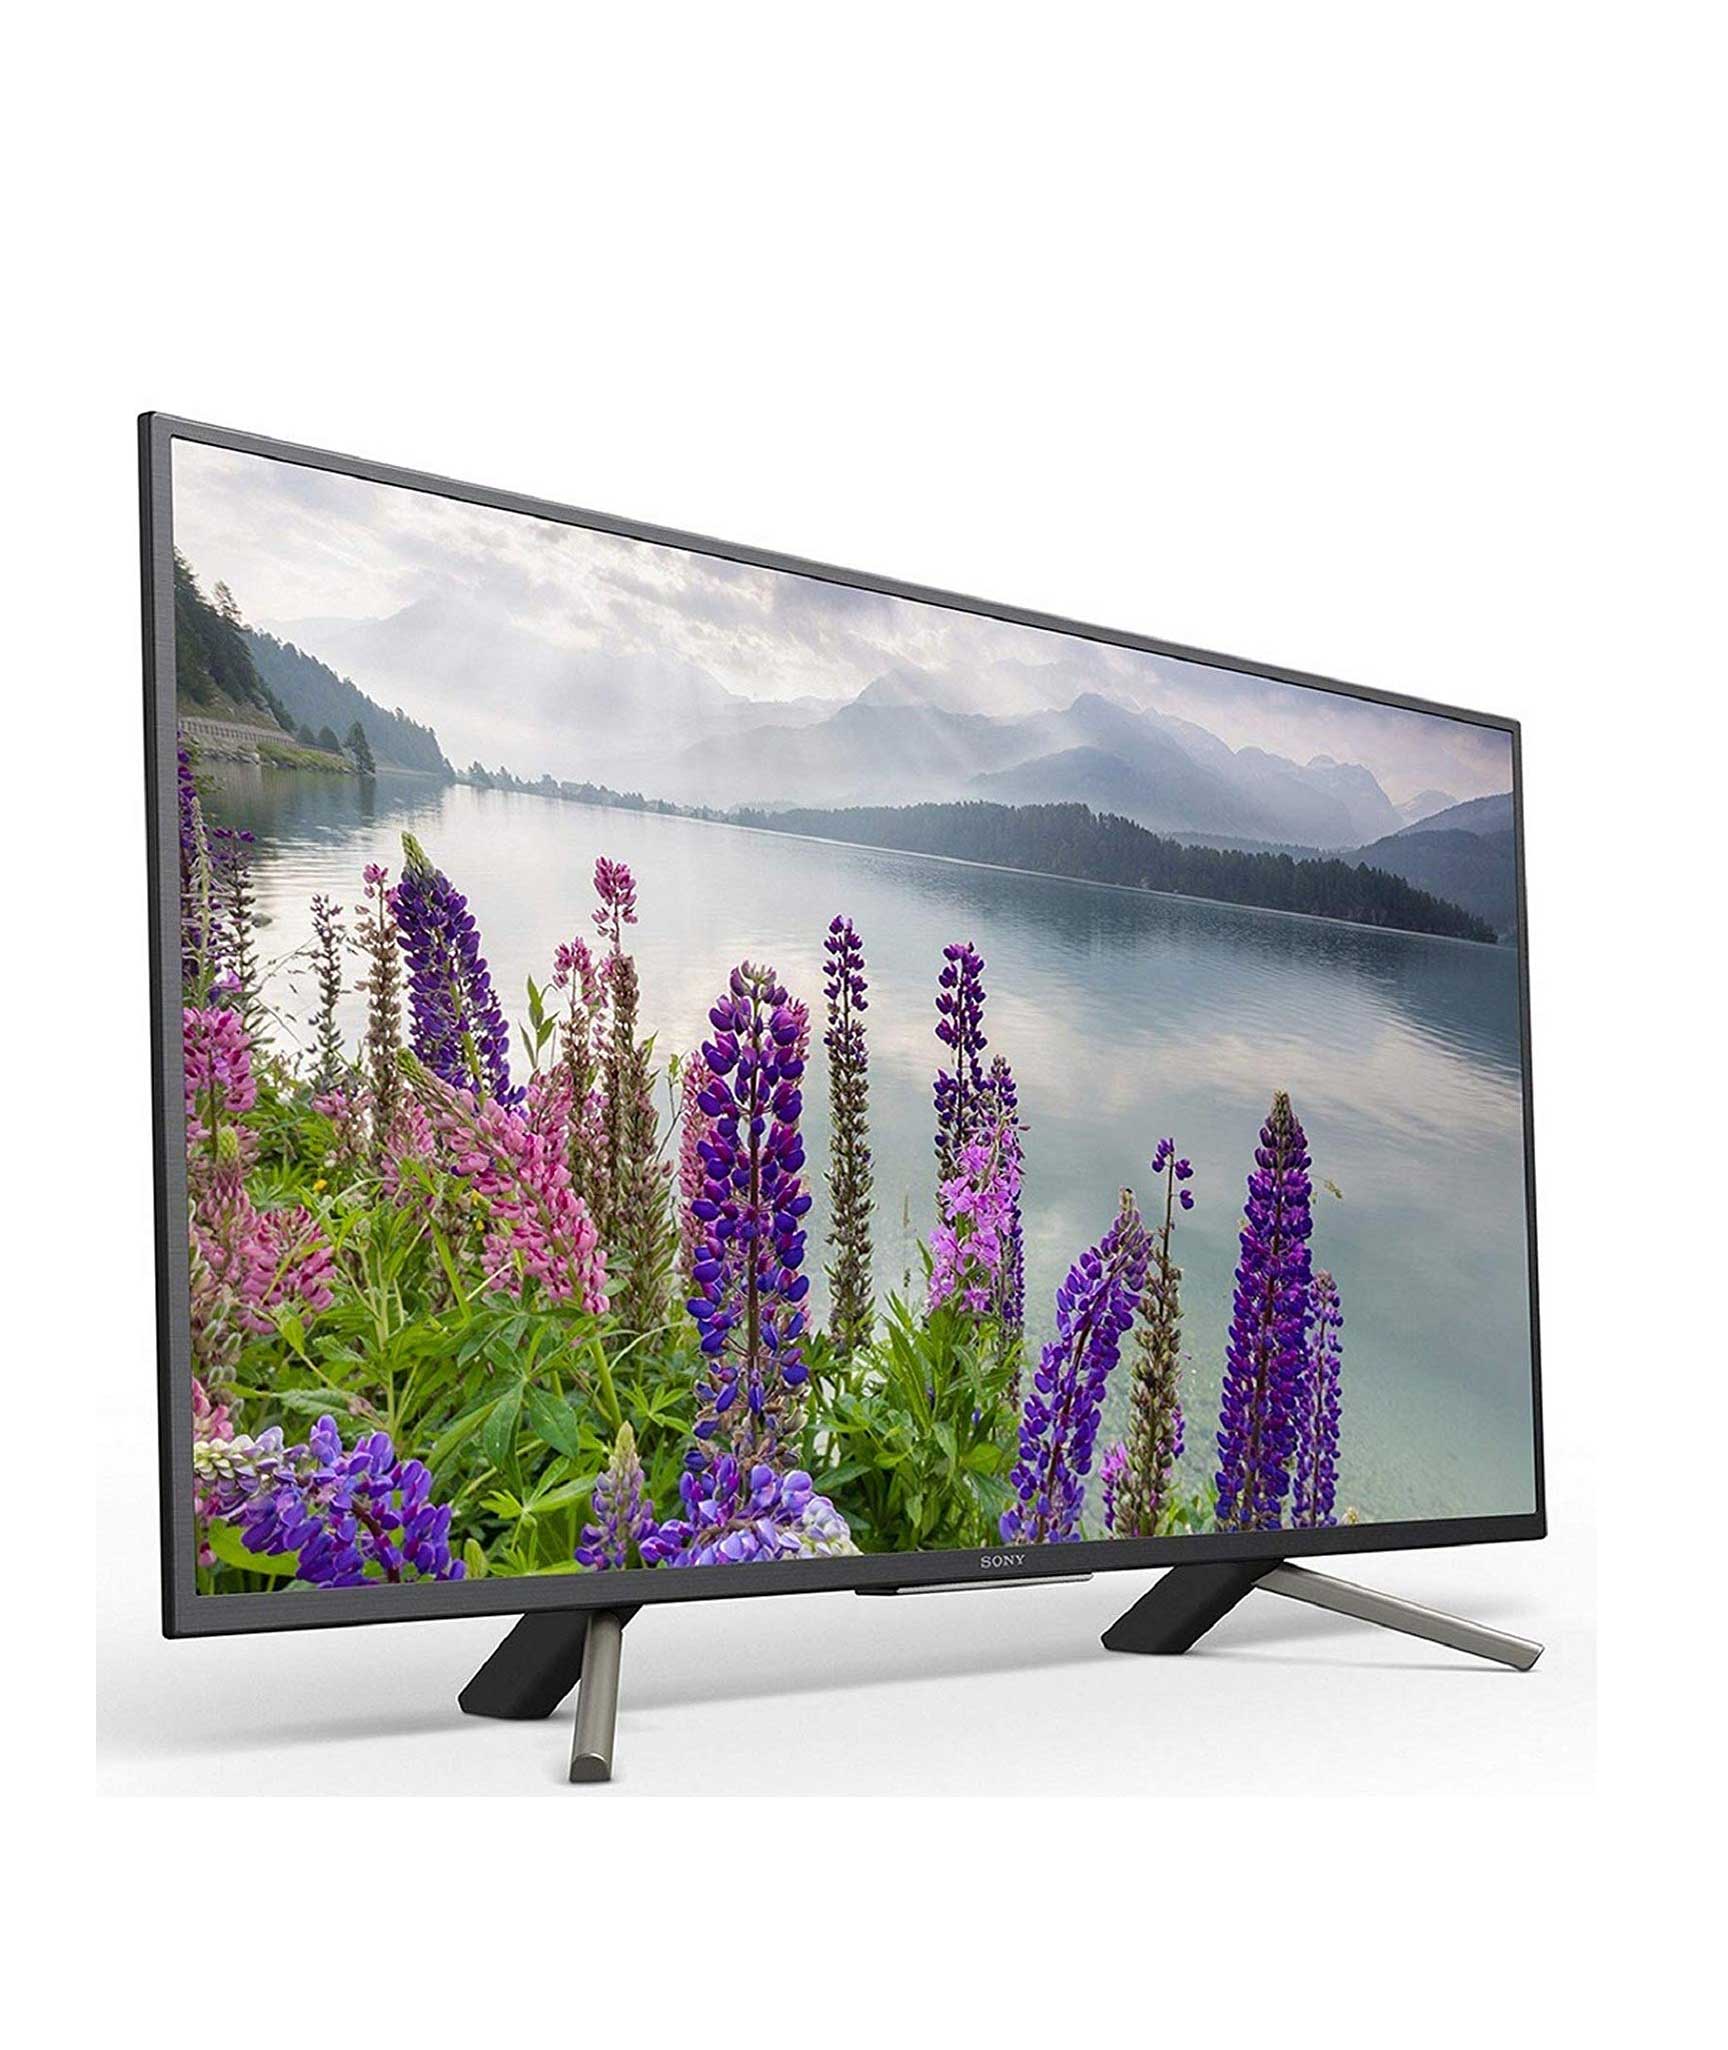 SONY Bravia KDL -43W660G Full HD LED Smart TV - 43 Inch